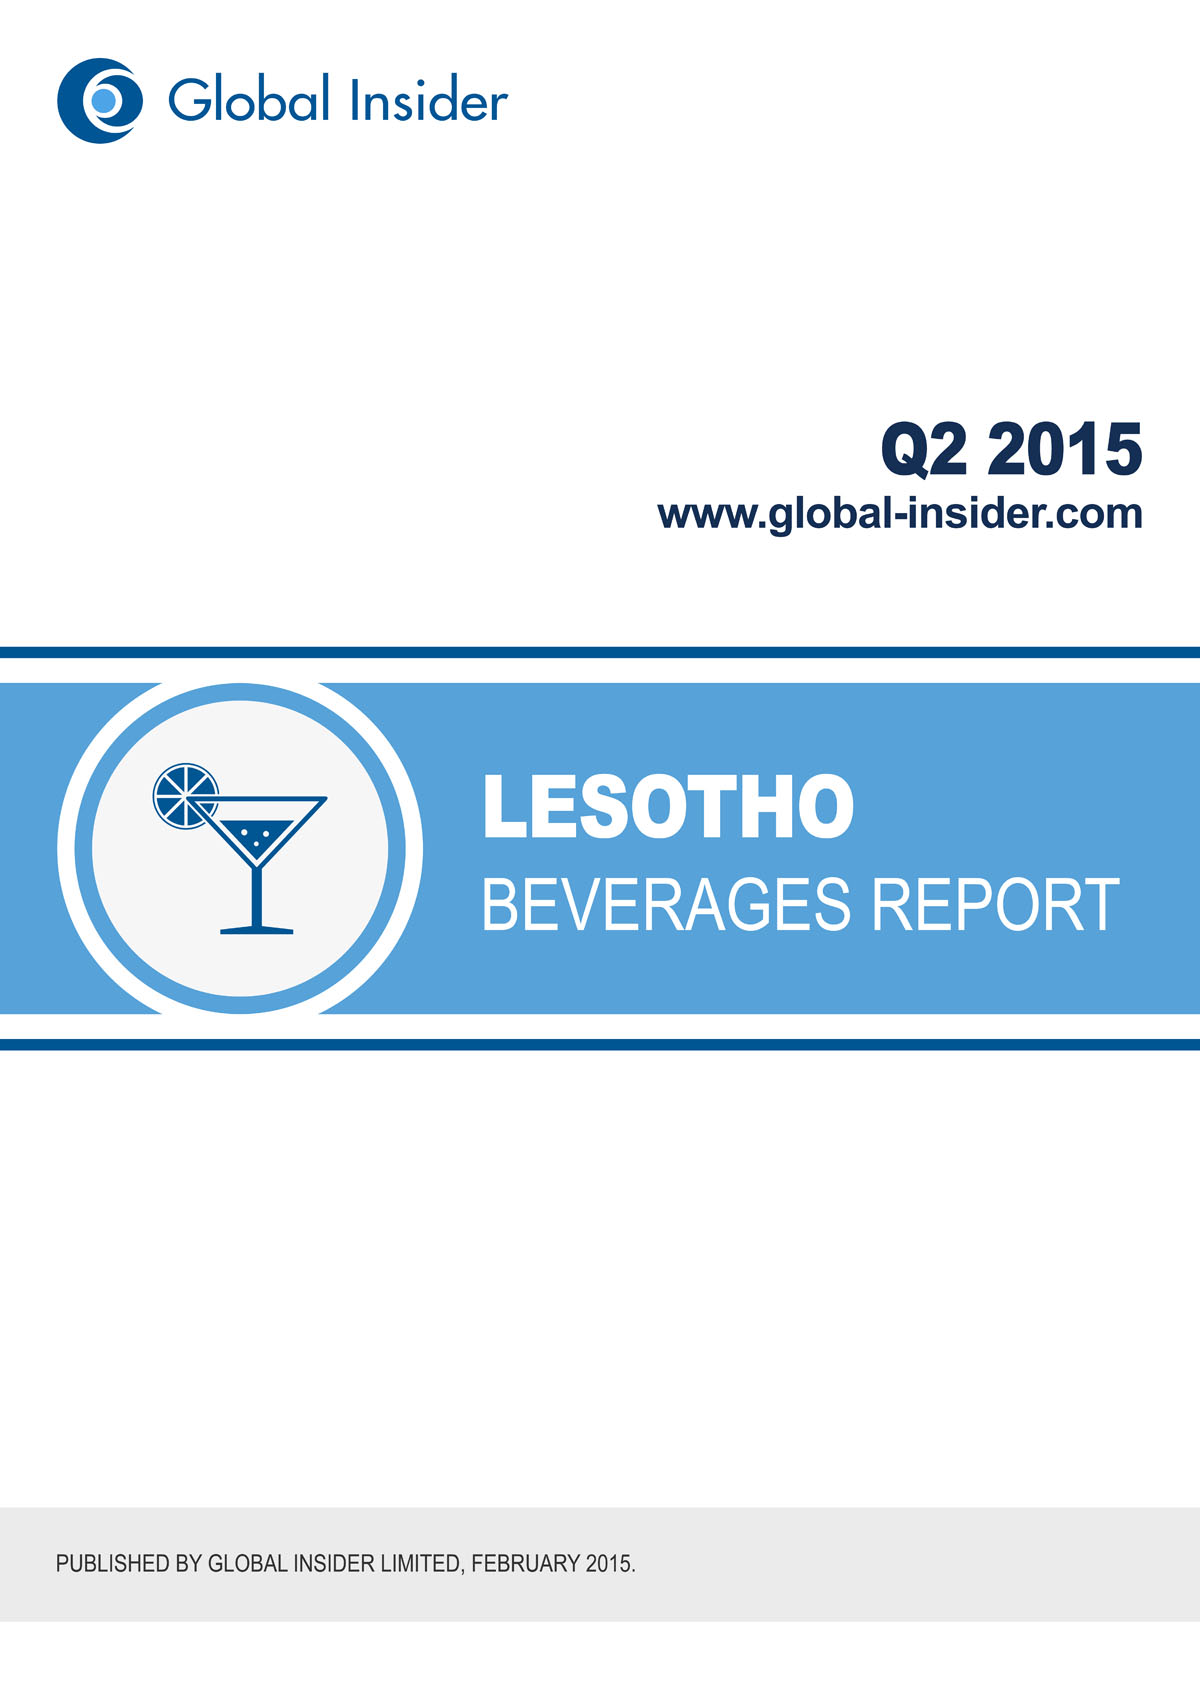 Lesotho Beverages Report